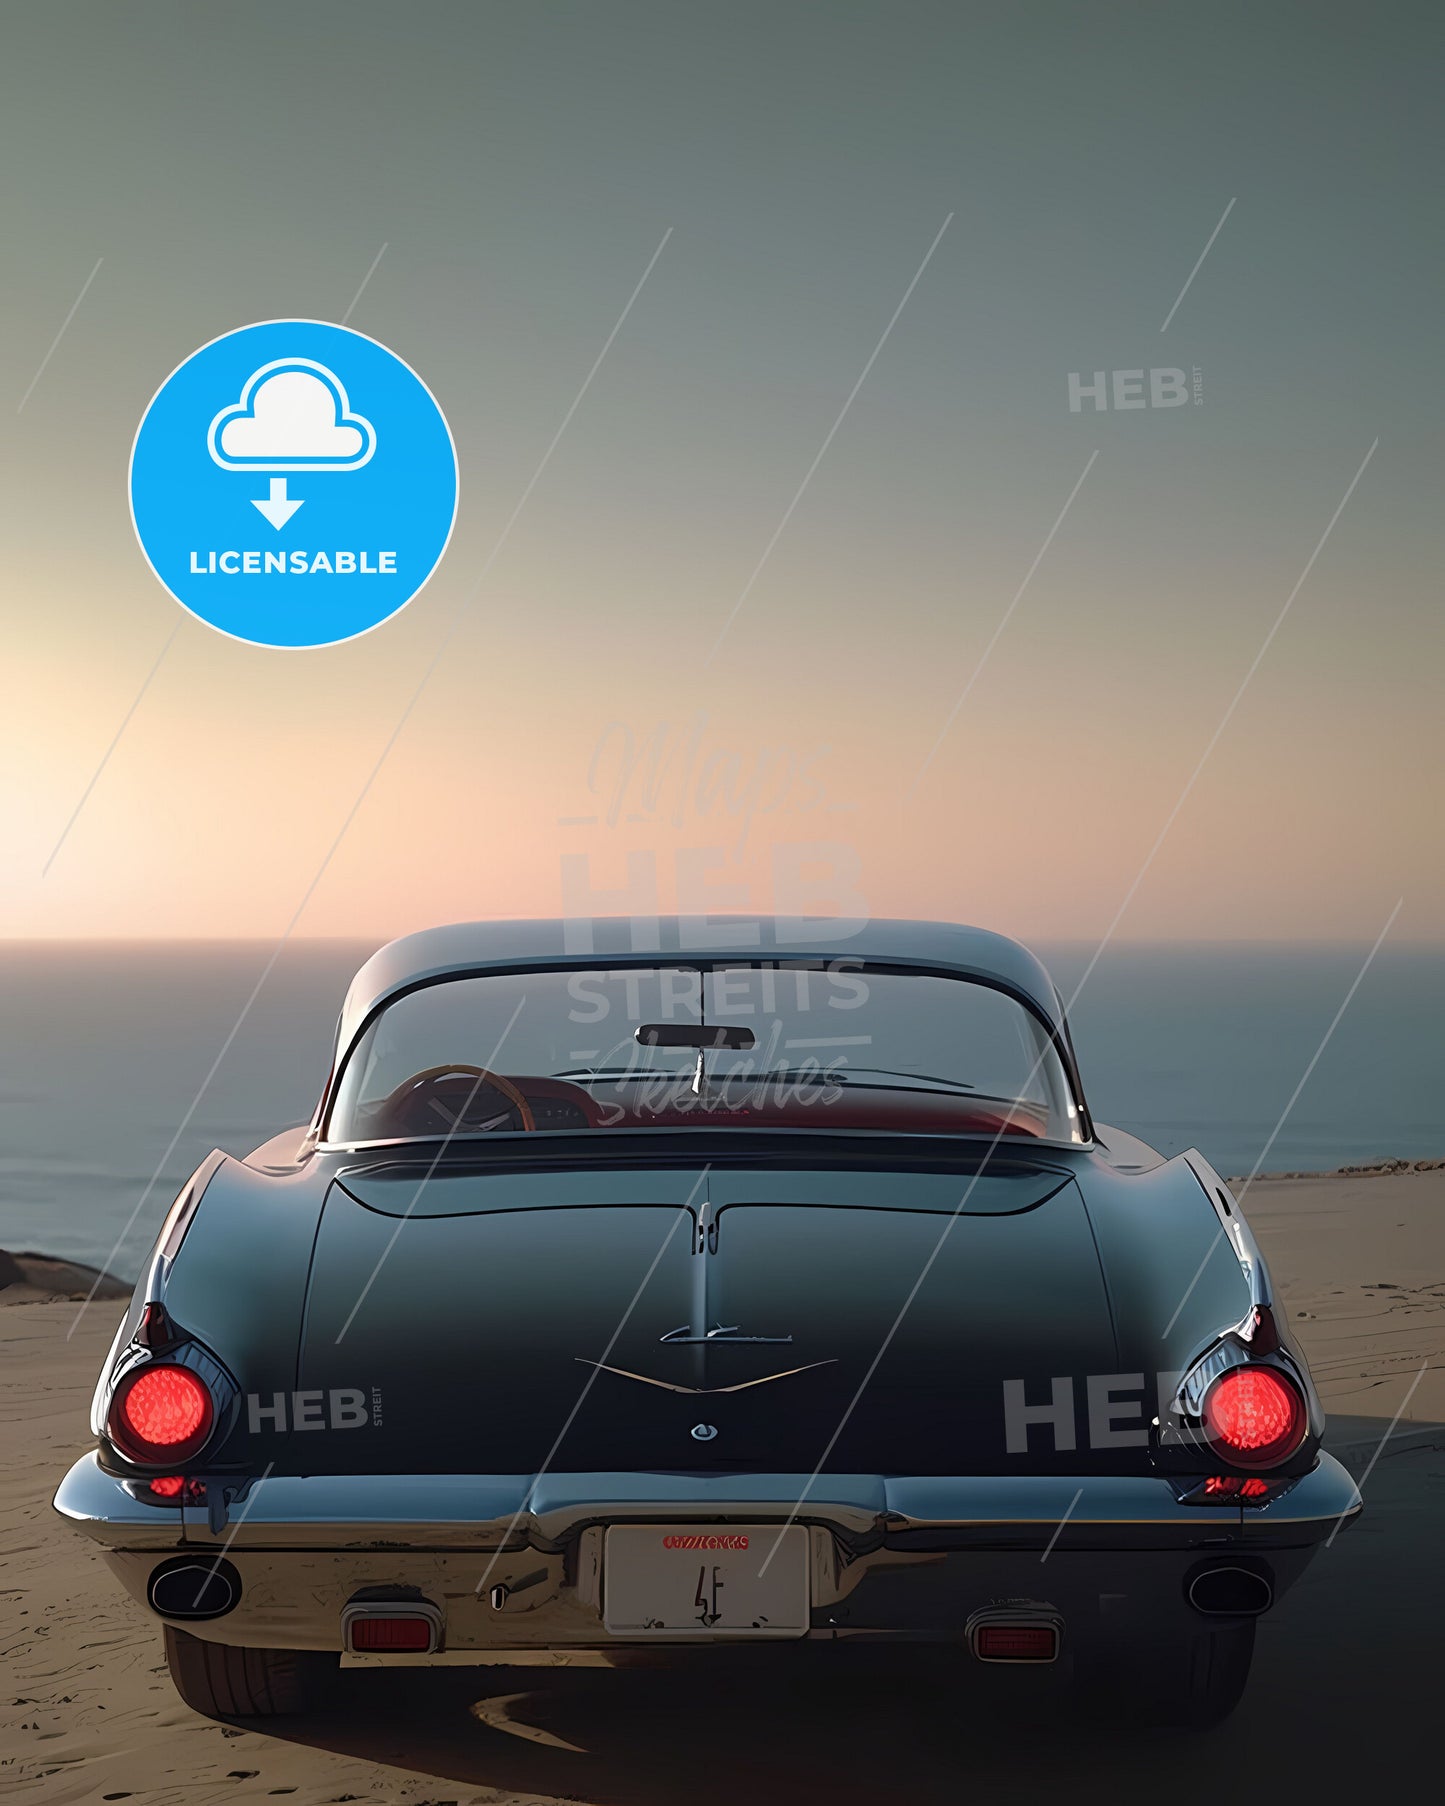 Vibrant Black Classic Automobile Painting on Blue Gradient Sky with Beachfront Focus